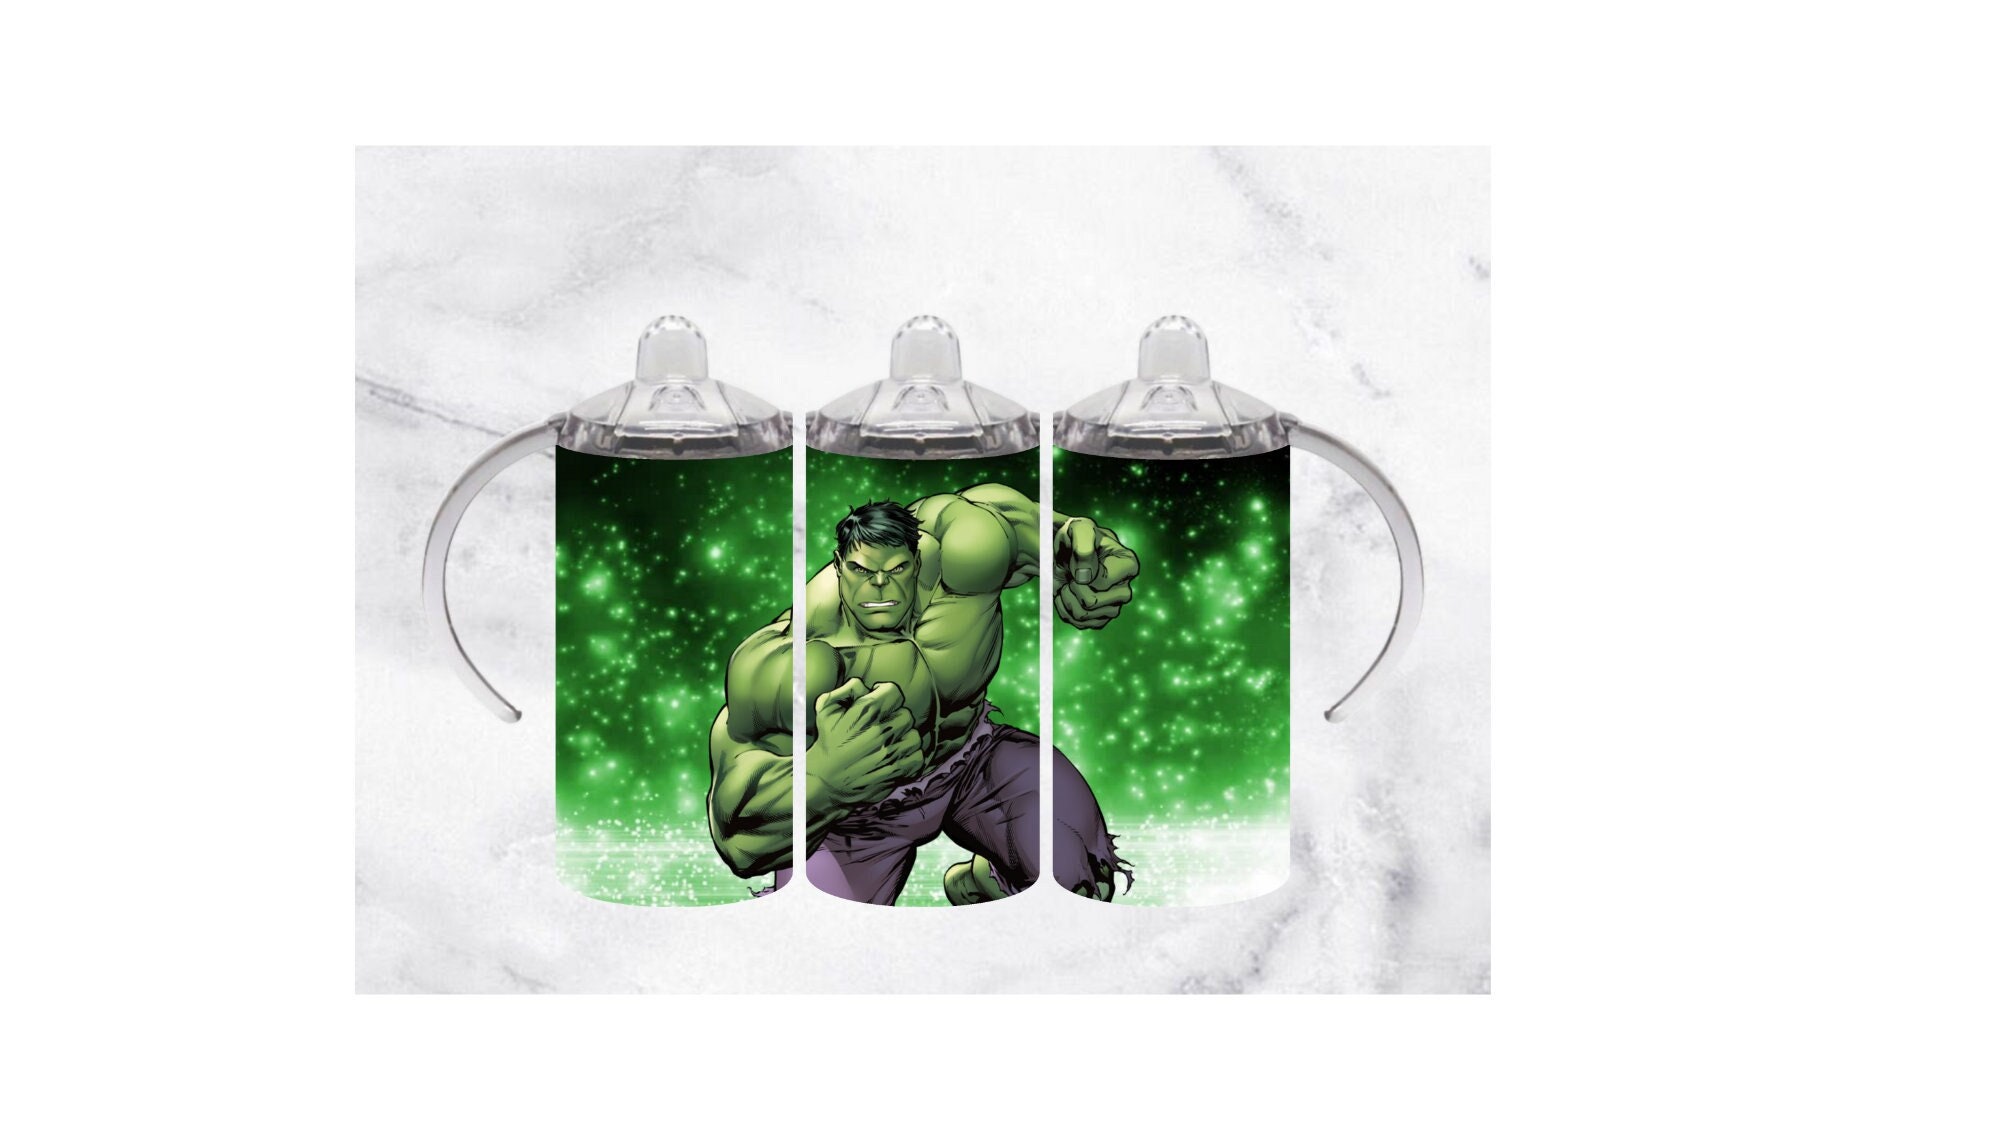  1- 5.5x5.5 inch Custom Cut Stencil, (VE-17) Hulk Arts